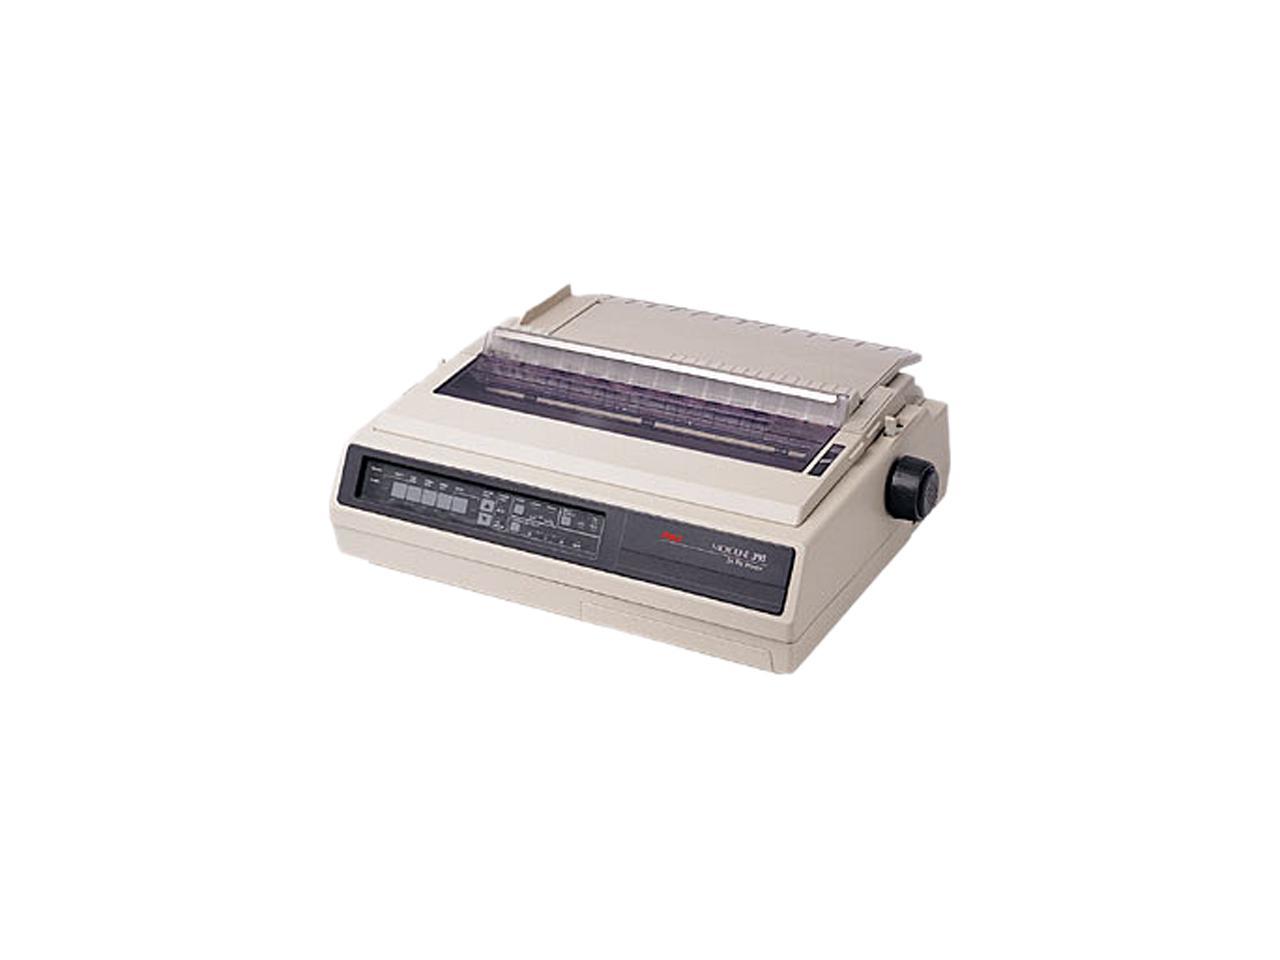 OKIDATA MICROLINE 395 (62410501) - Parallel & Serial 24 pin 120V Up to 610cps Dot Matrix Printer